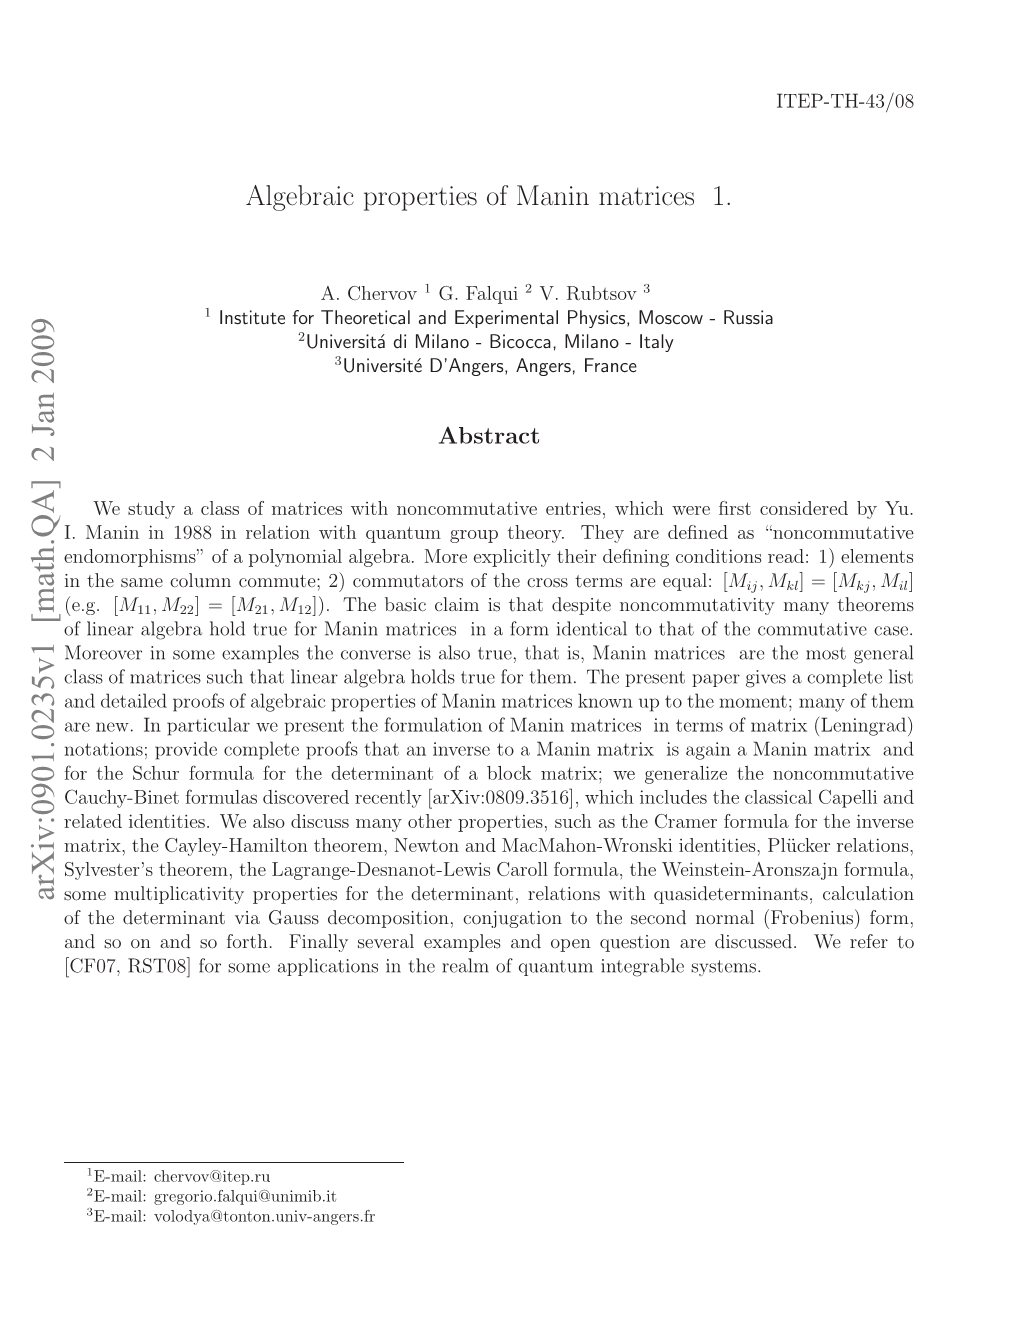 Algebraic Properties of Manin Matrices 1